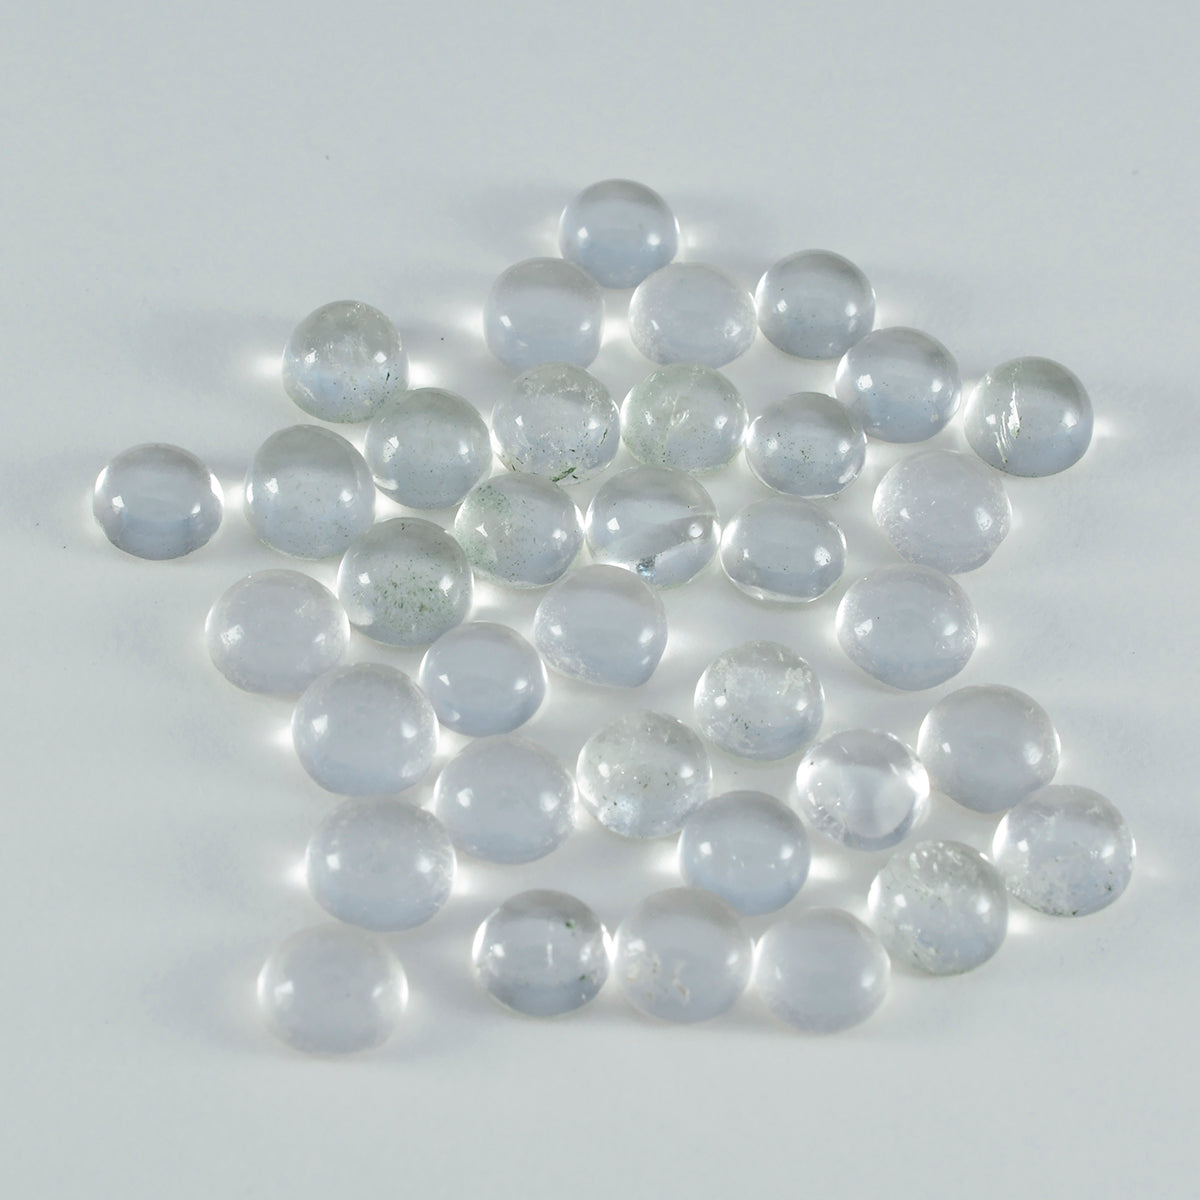 Riyogems 1PC White Crystal Quartz Cabochon 4x4 mm Round Shape AA Quality Loose Gems